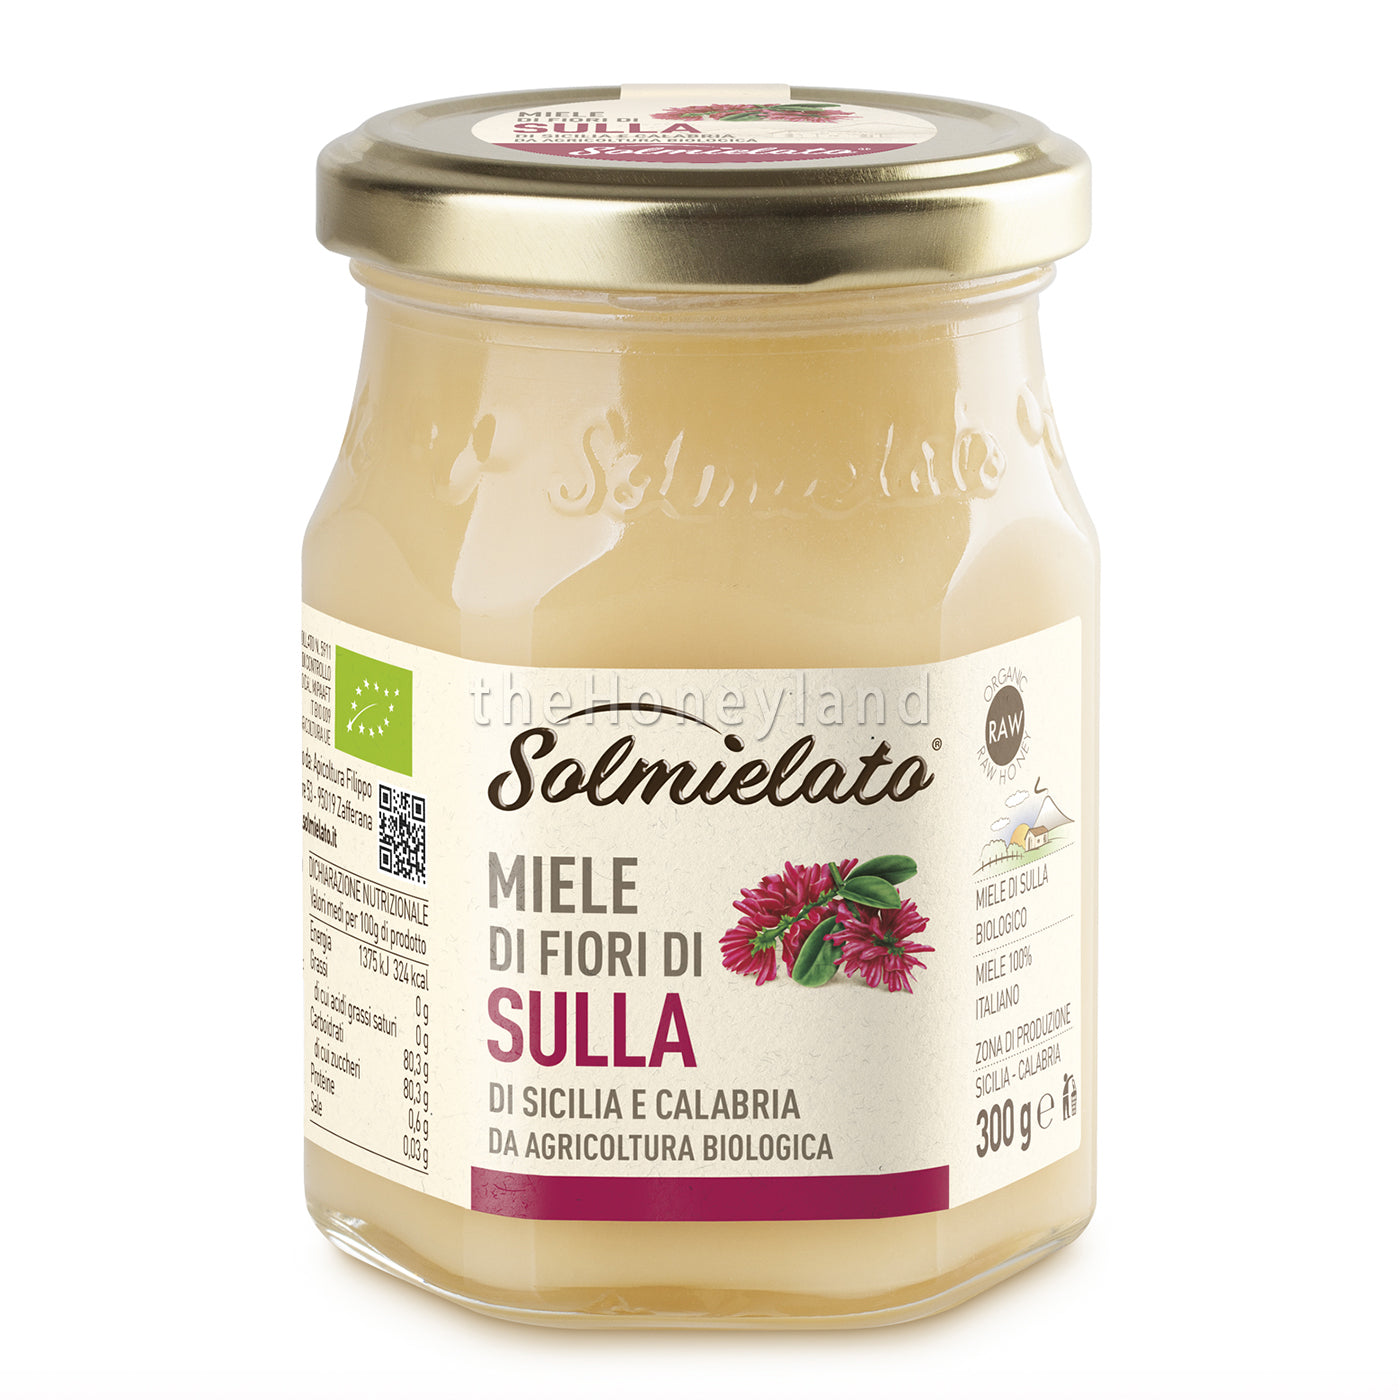 Sulla Honey from the Sicilian hills